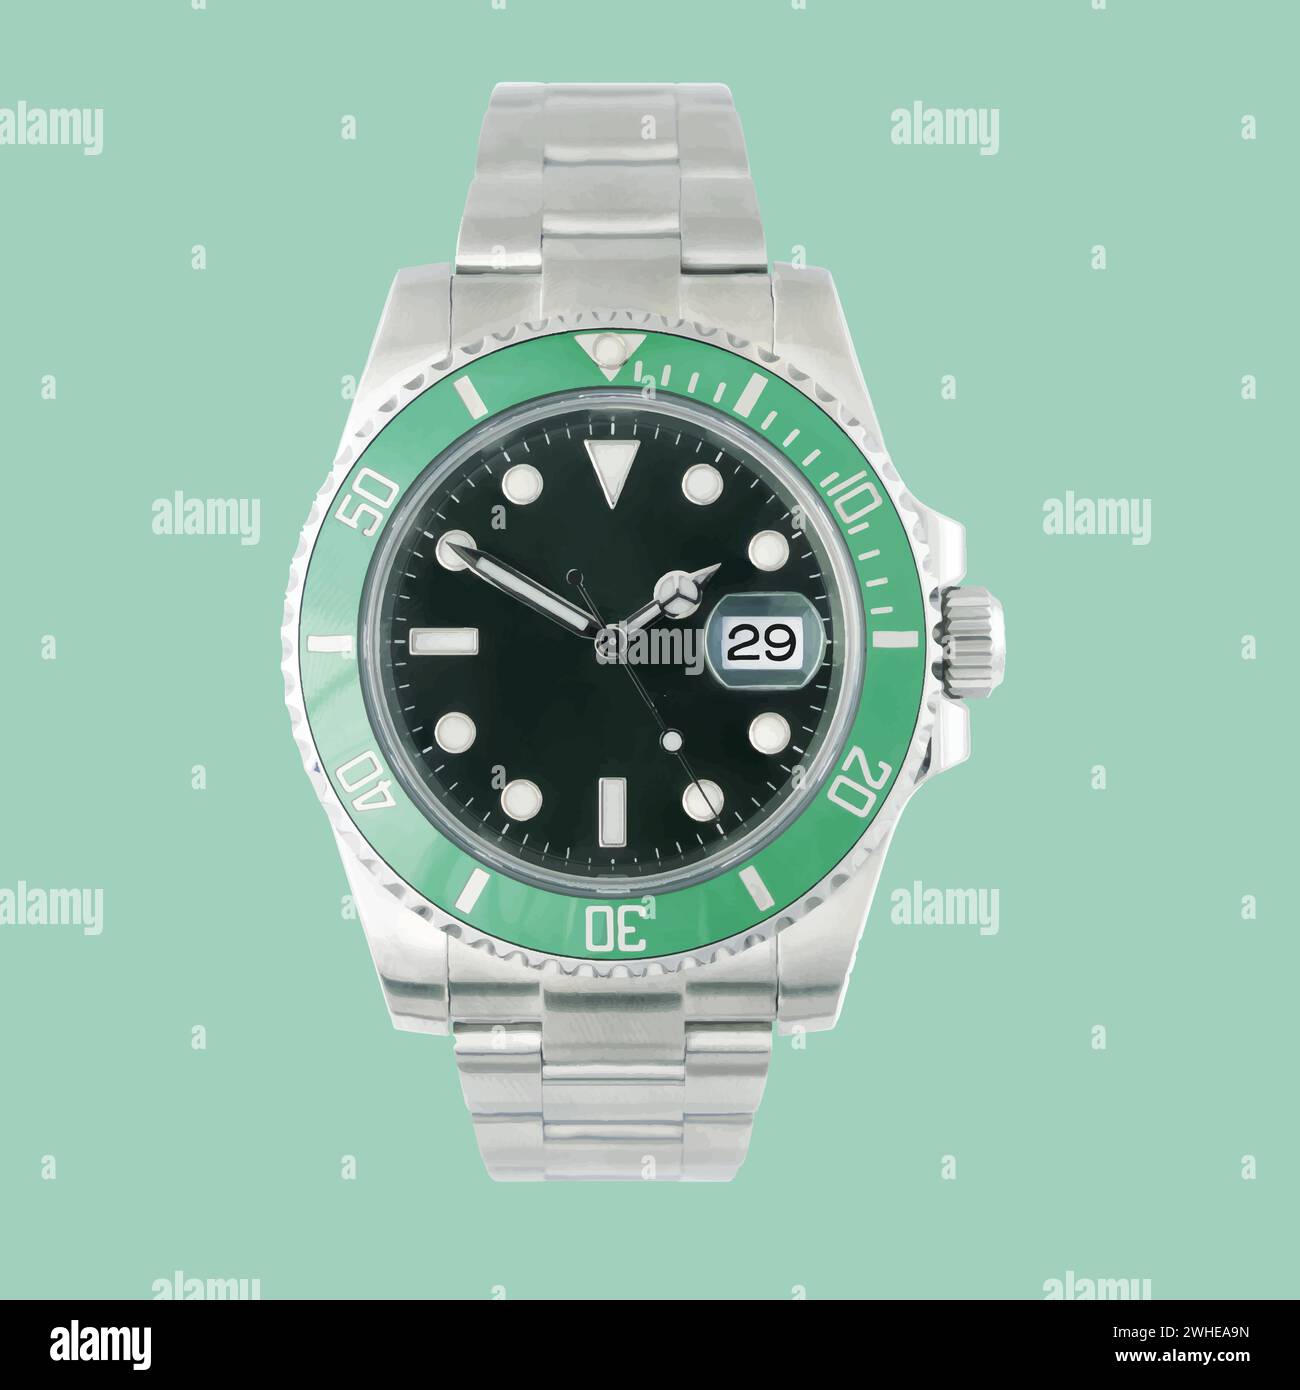 Rolex silver belt green and black wrist watch Stock Vector